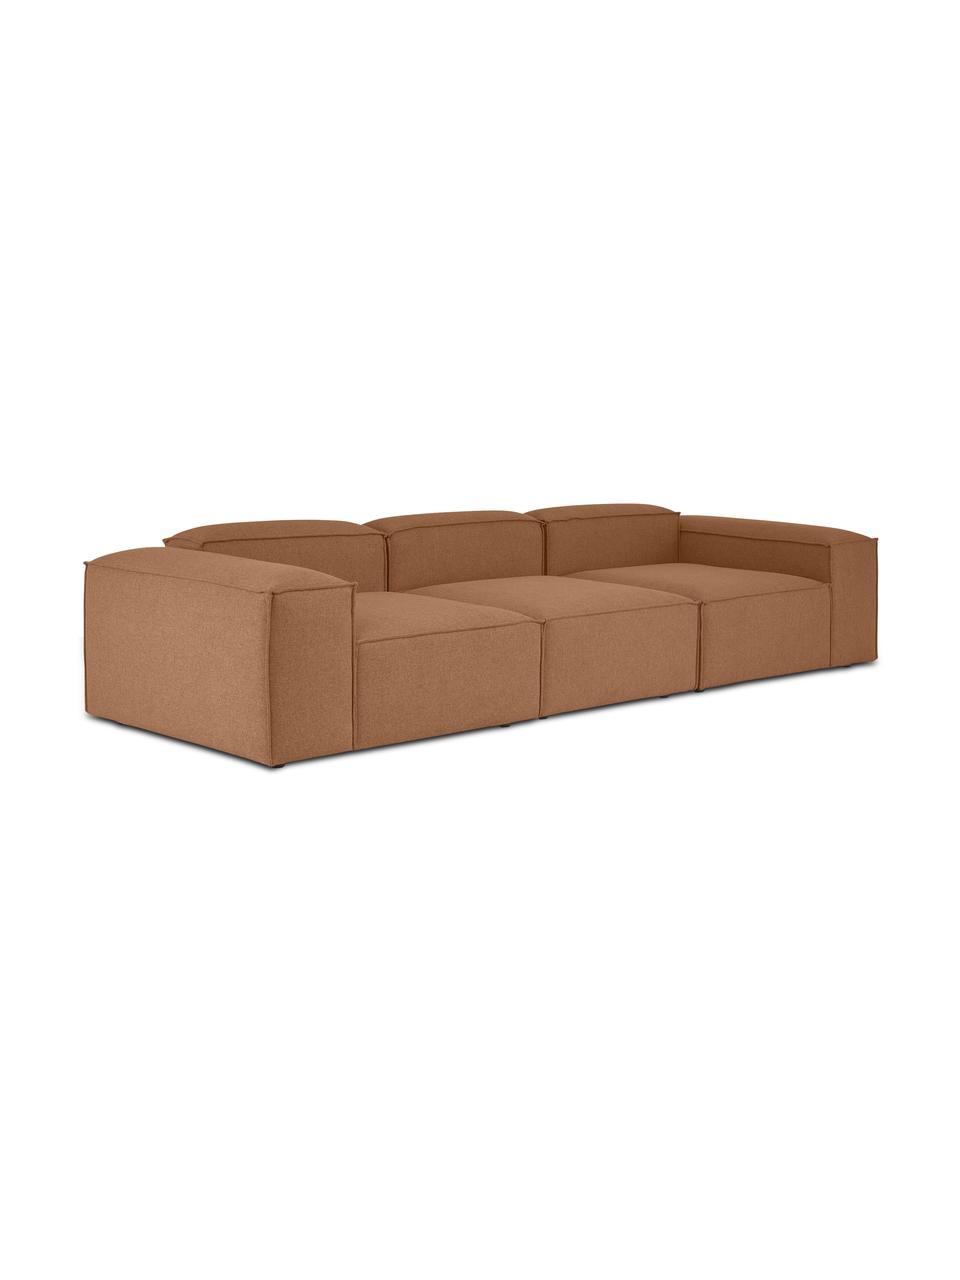 Modulares 4-Sitzer Sofa Dylan in Nougat, Bezug: 100% Polyester Der strapa, Gestell: Massives Kiefernholz, Spe, Braun, B 335 cm x T 113 cm